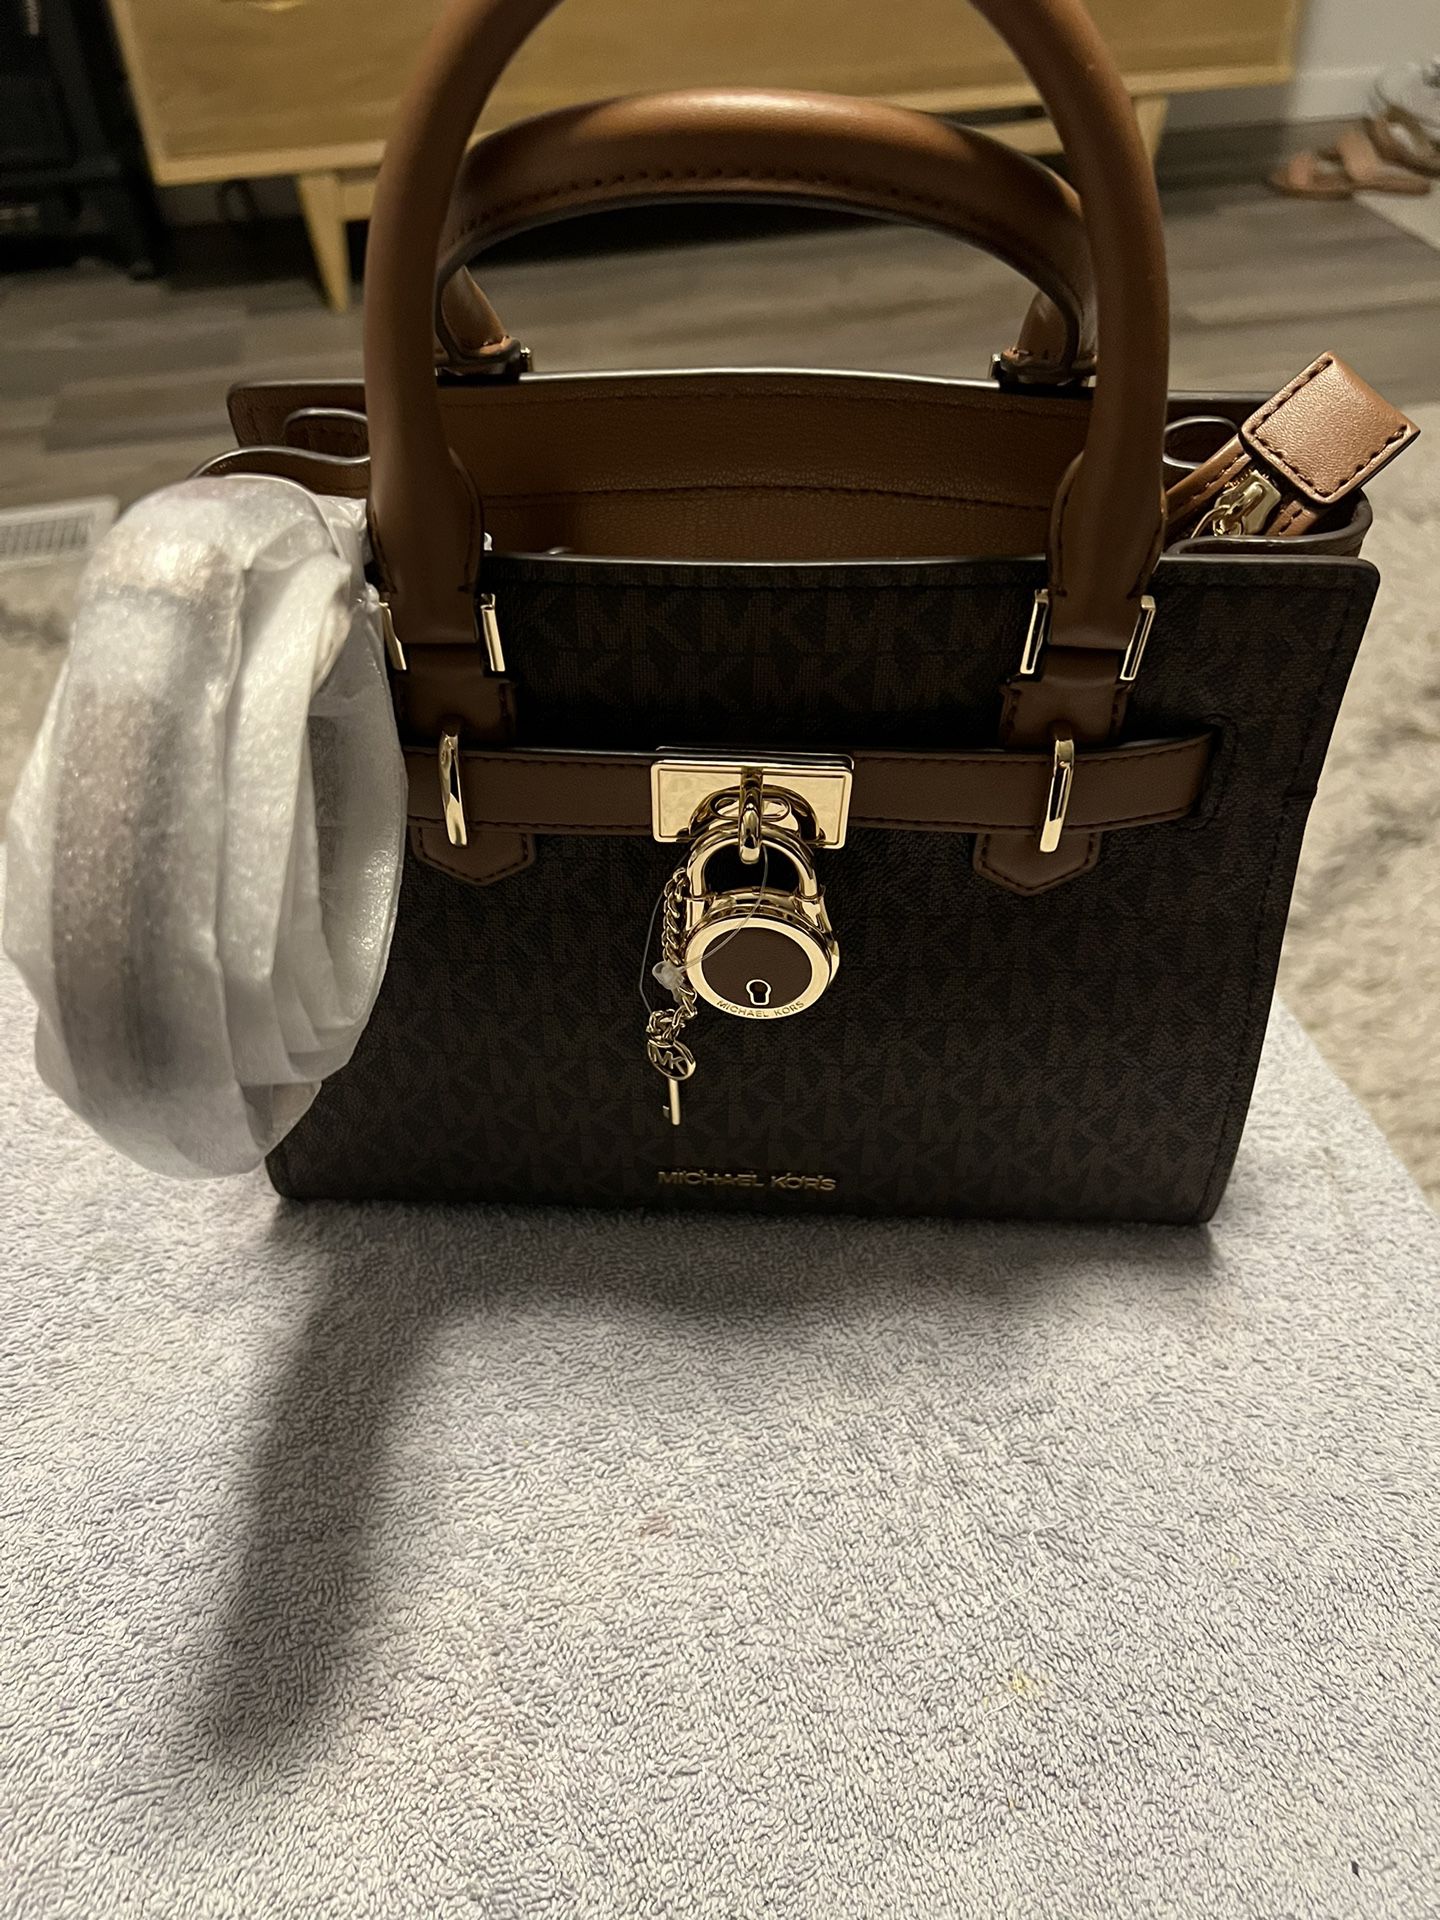 Michael Kors Handbag Authentic